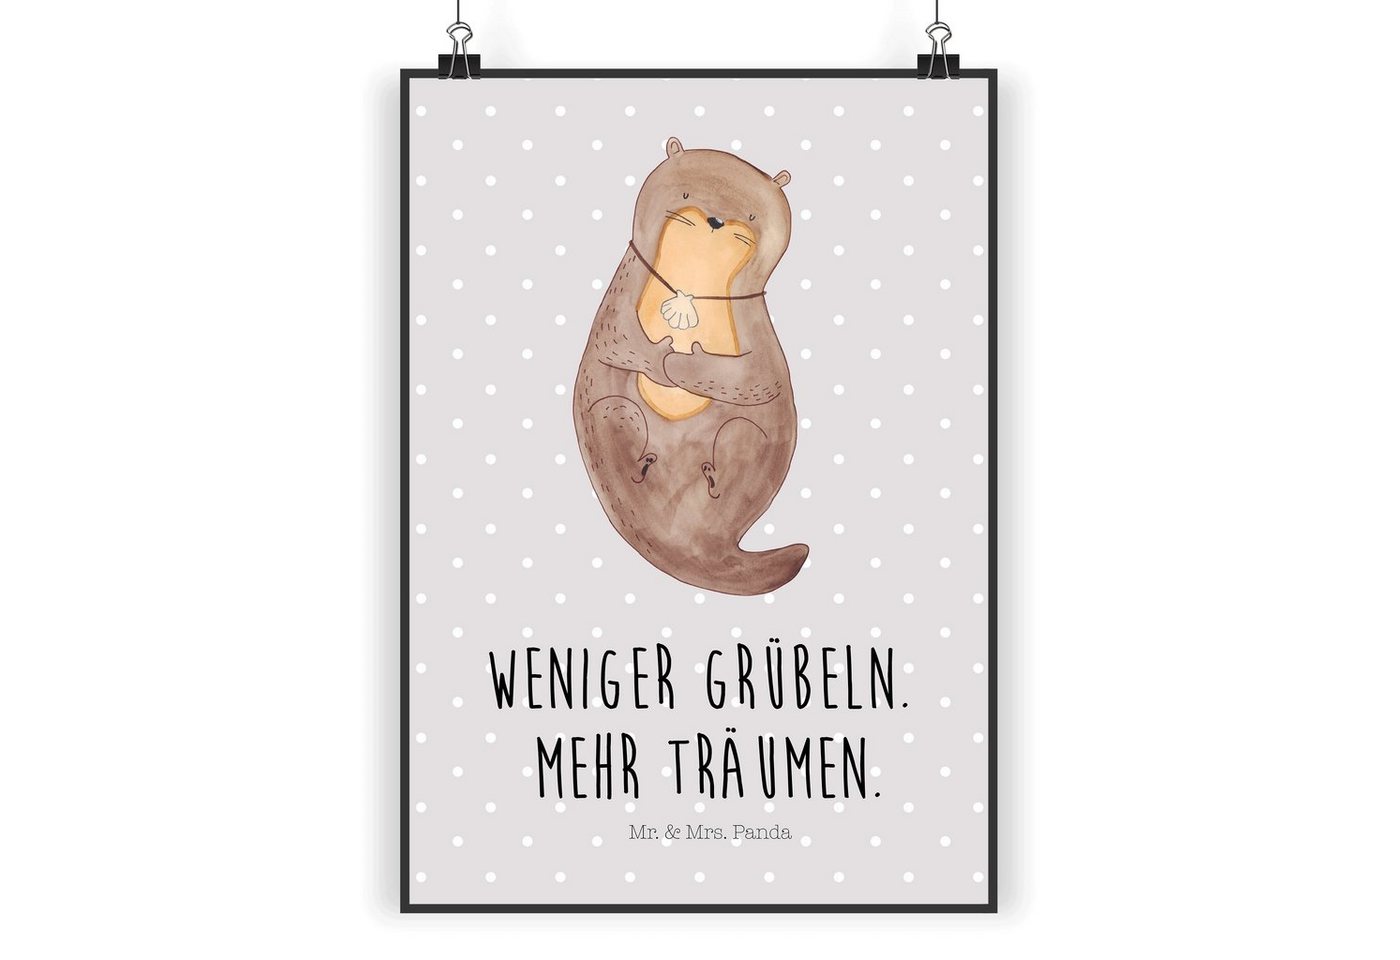 Mr. & Mrs. Panda Poster DIN A3 Otter Muschel - Grau Pastell - Geschenk, Seeotter, niedlich, K, Otter mit Muschelmedaillon (1 St), Lebensfrohes Design von Mr. & Mrs. Panda